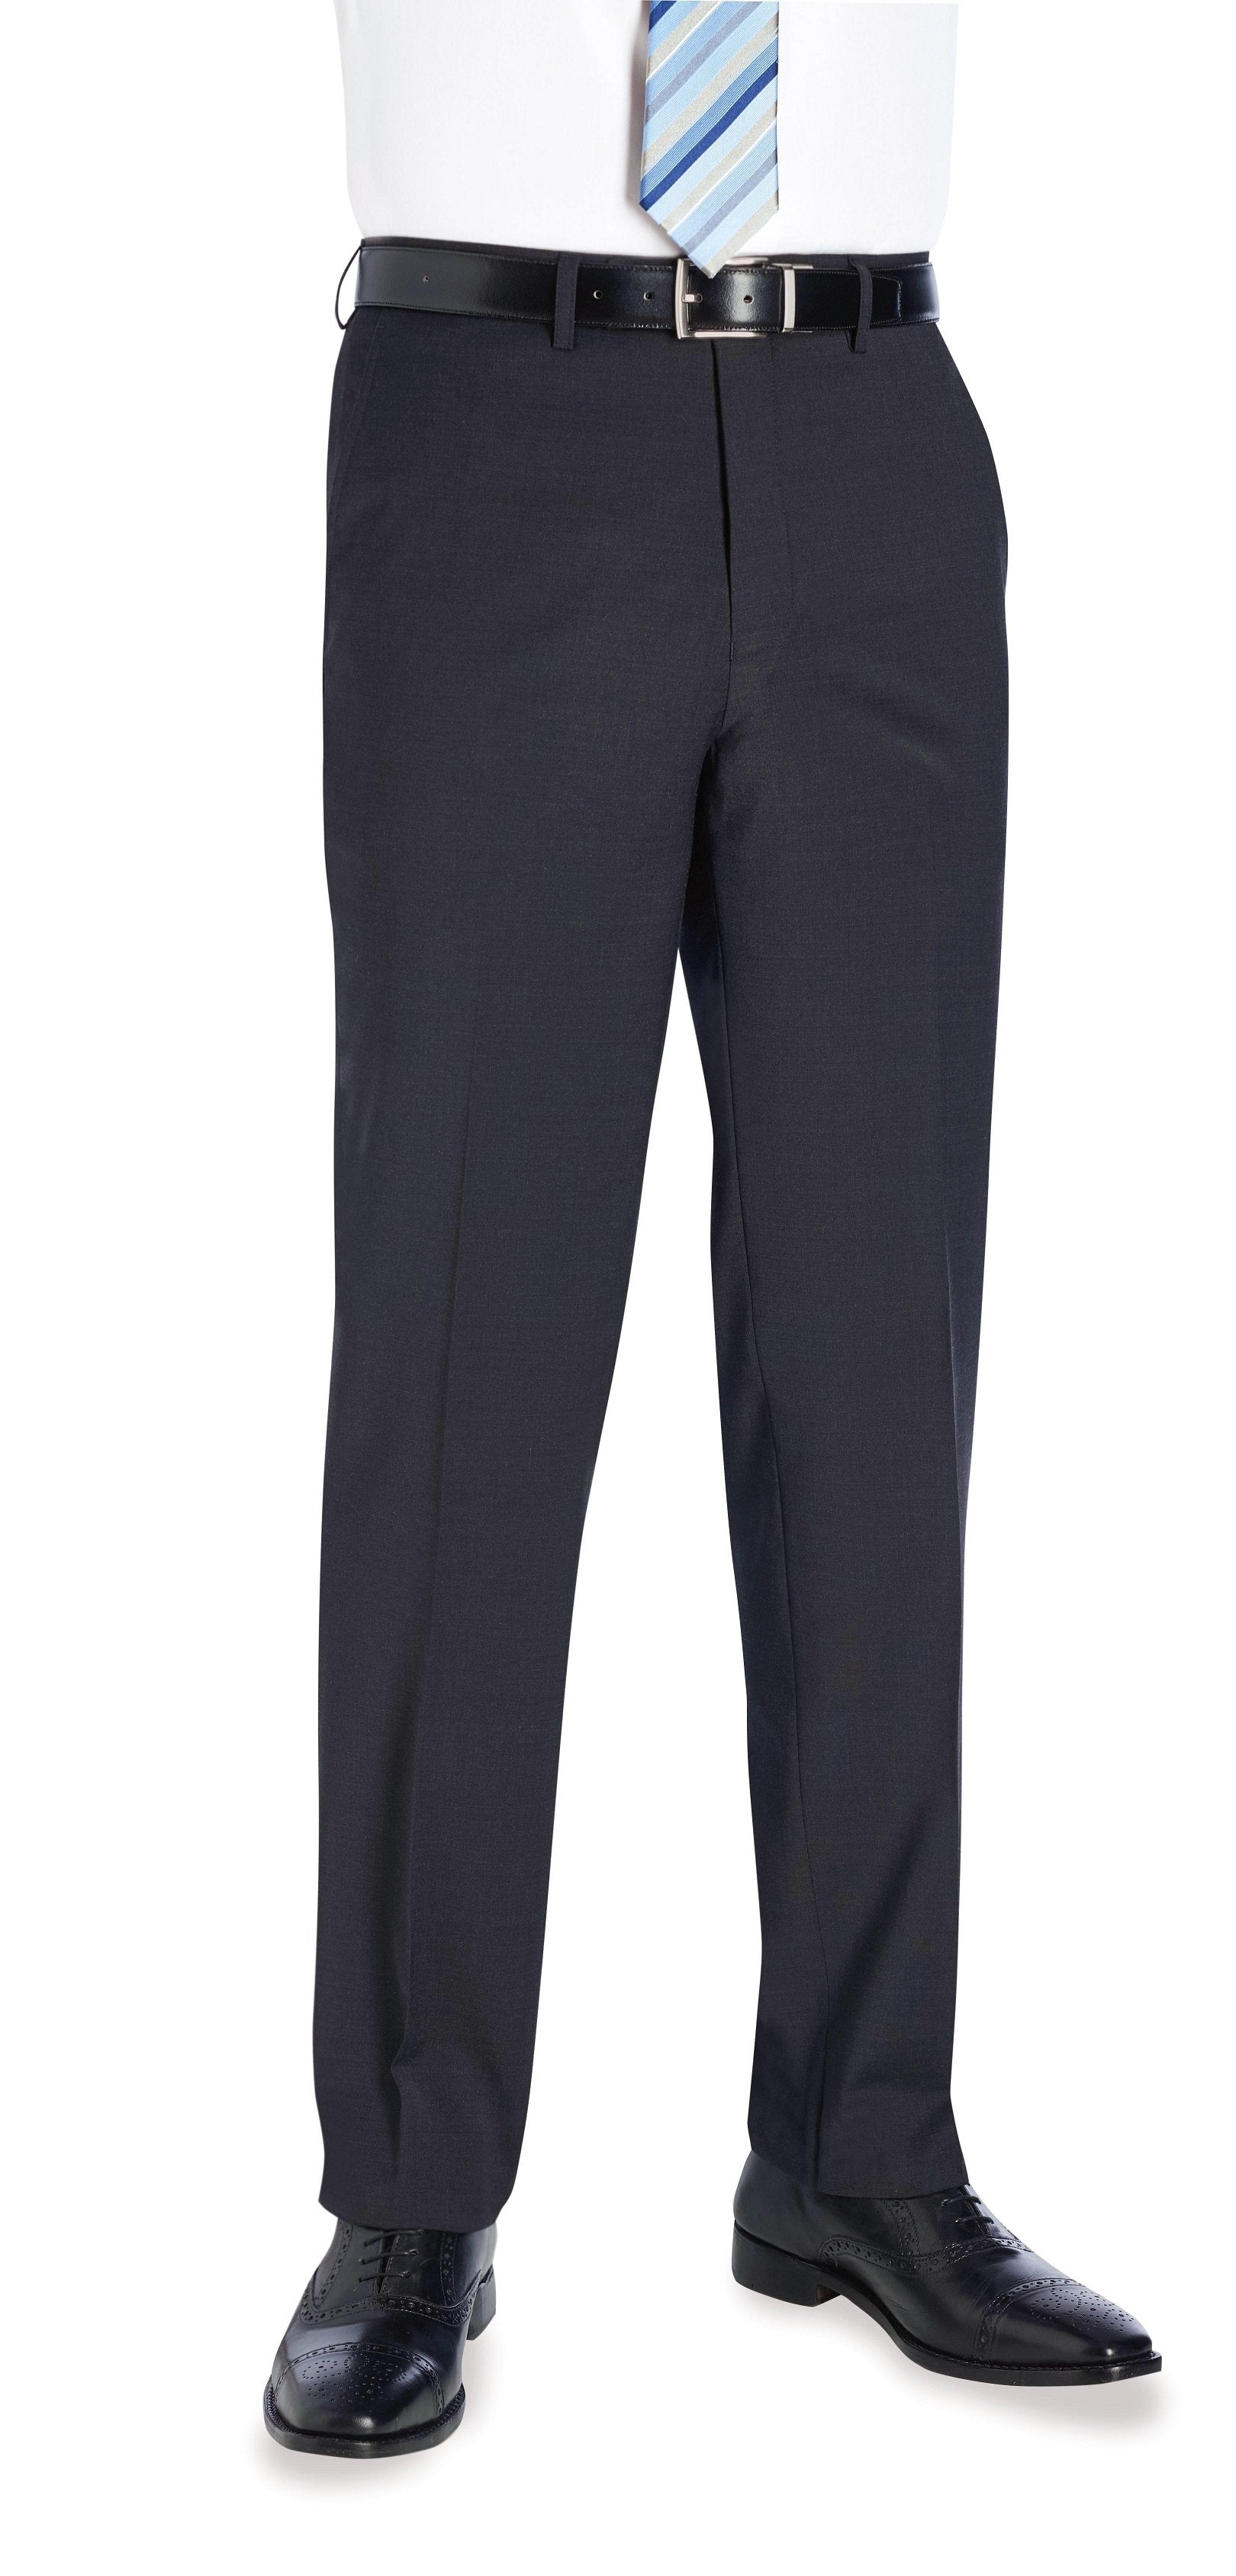 Avalino Flat Front Pants, Charcoal Grey - Mens dark grey suit pants